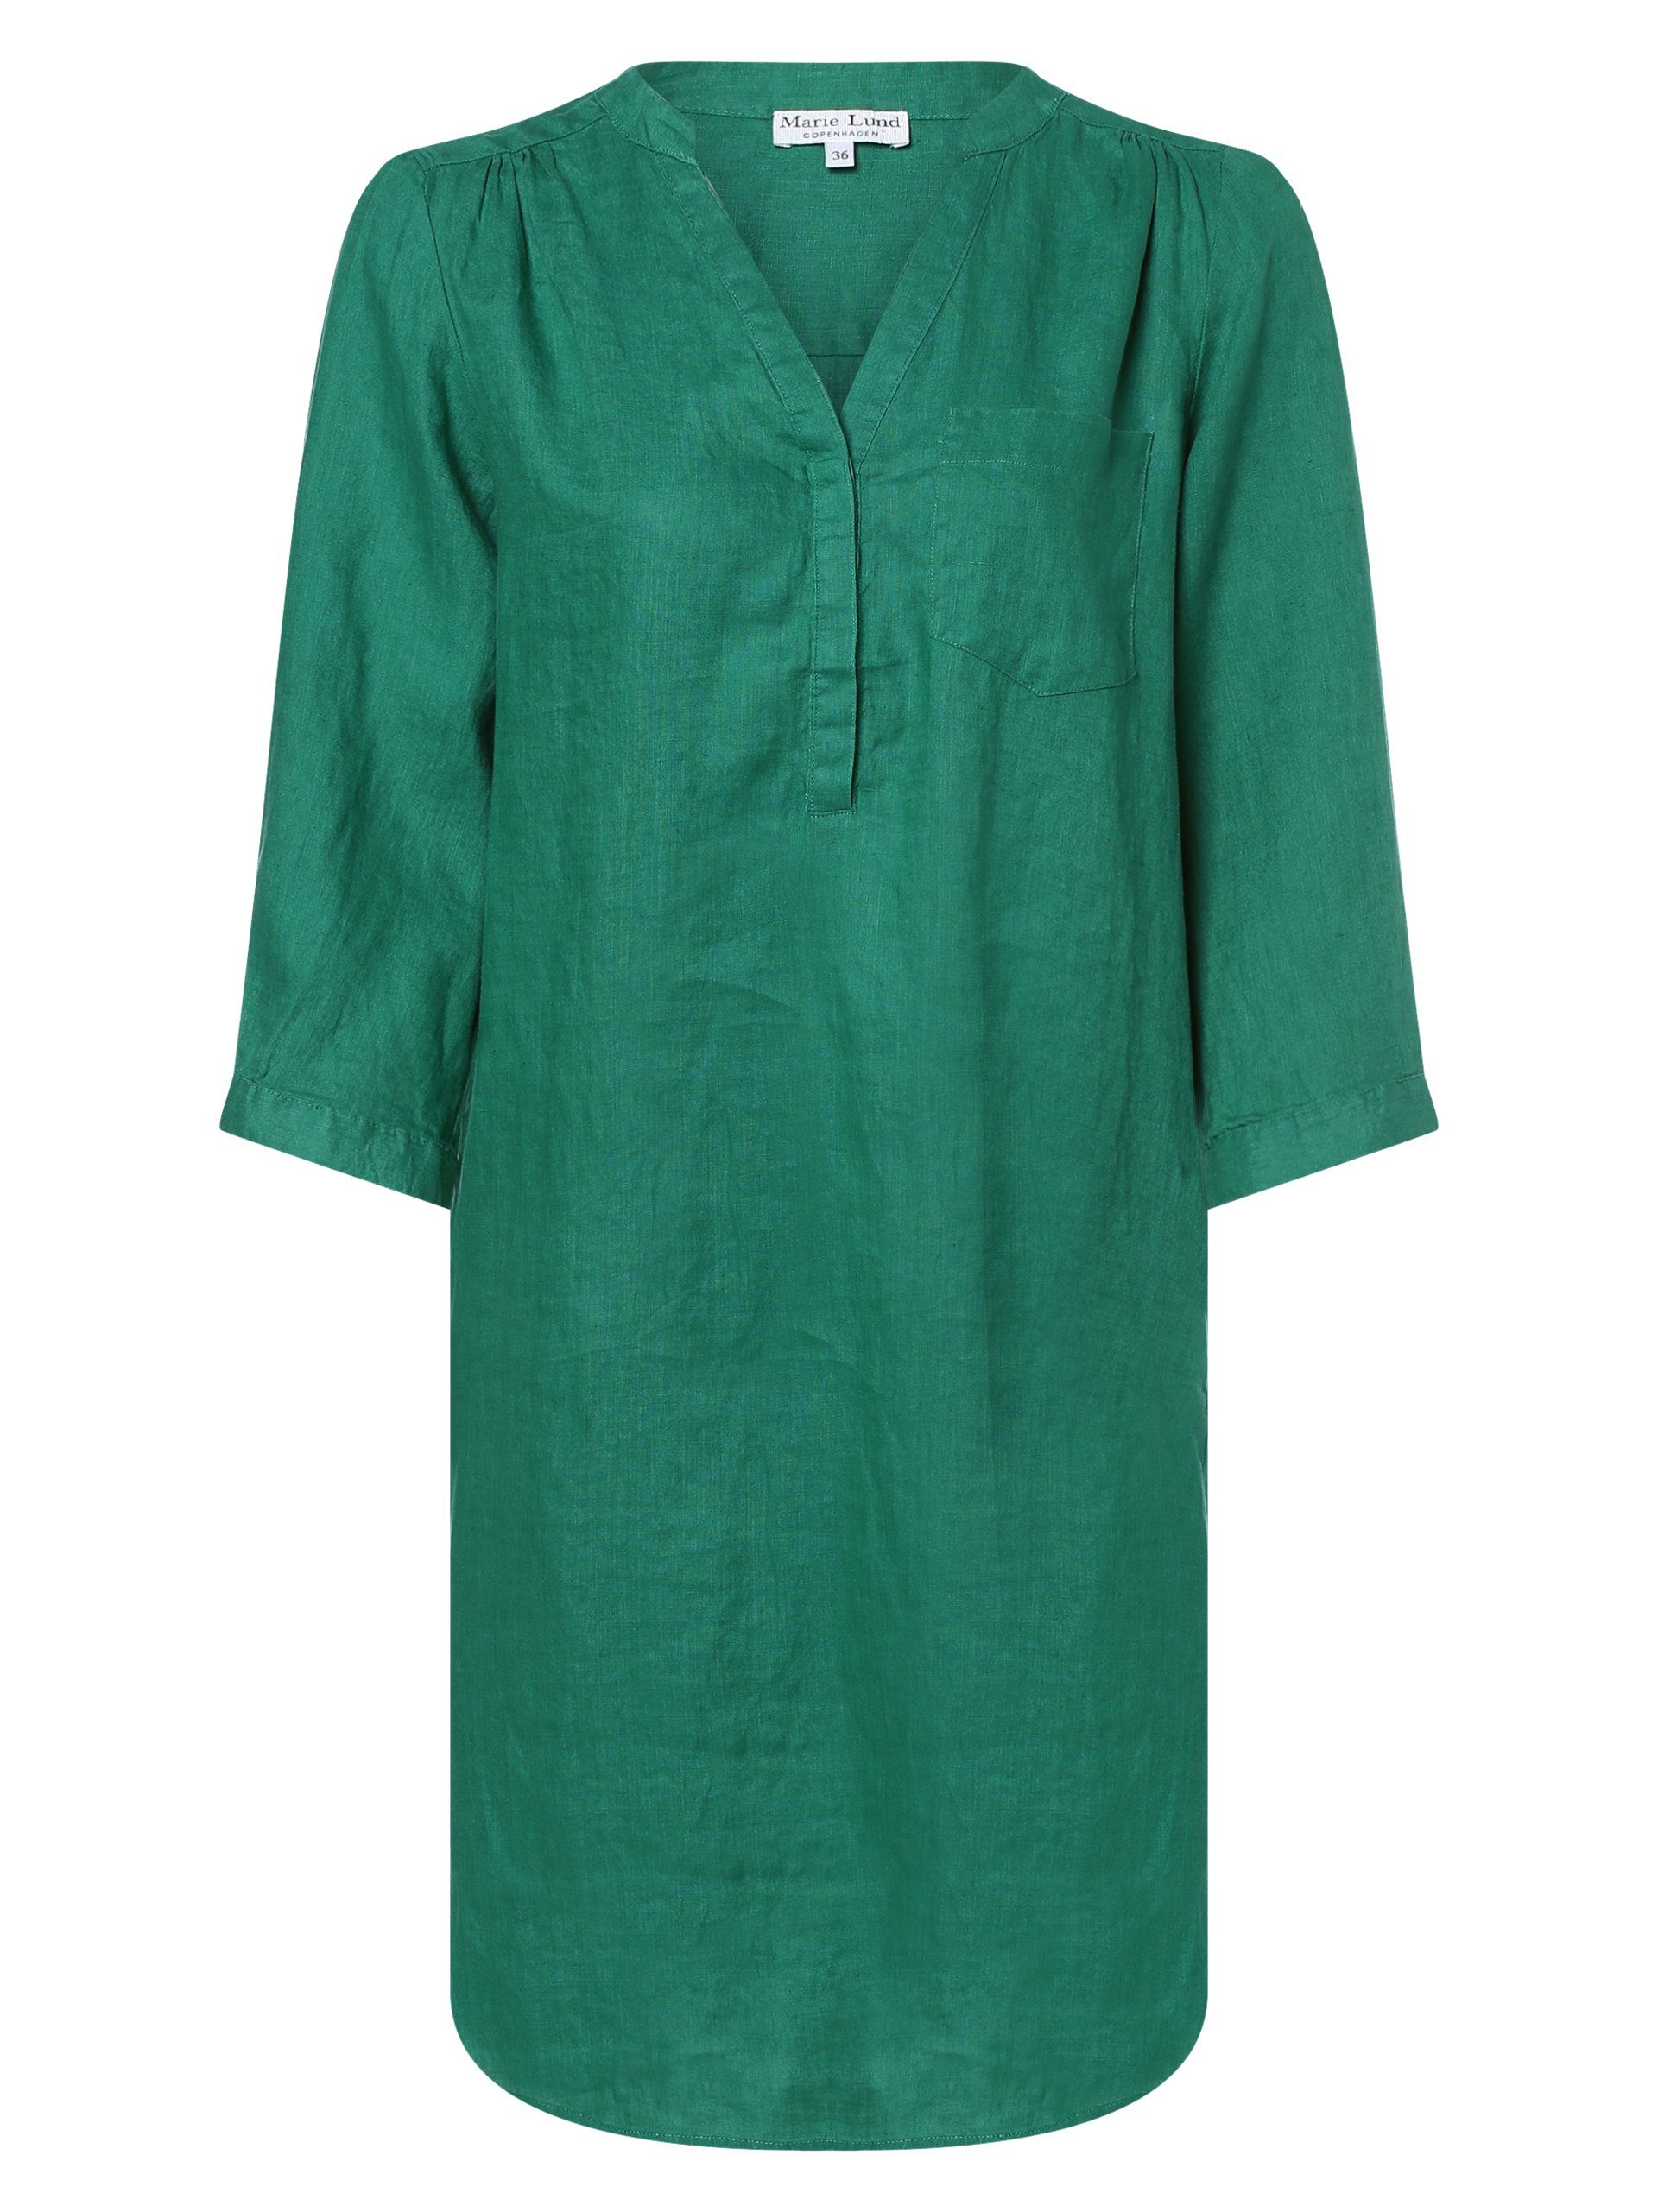 Marie Lund Sommerkleid smaragd